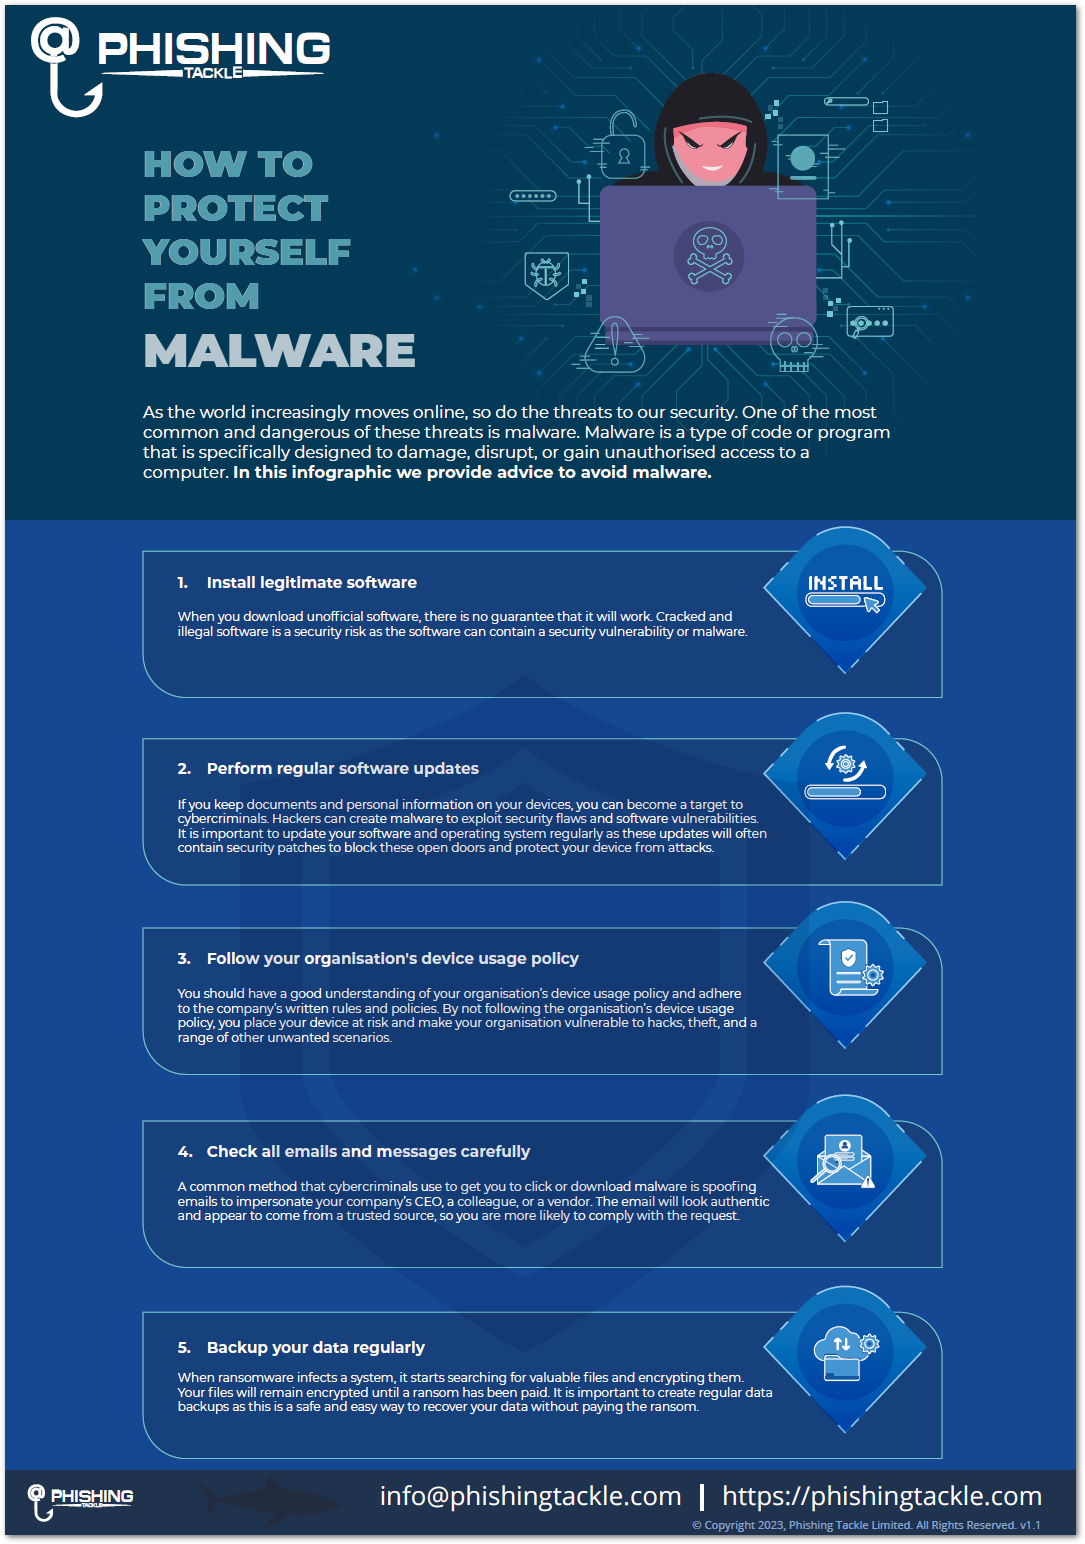 Phishing Tackle Malware Infographic